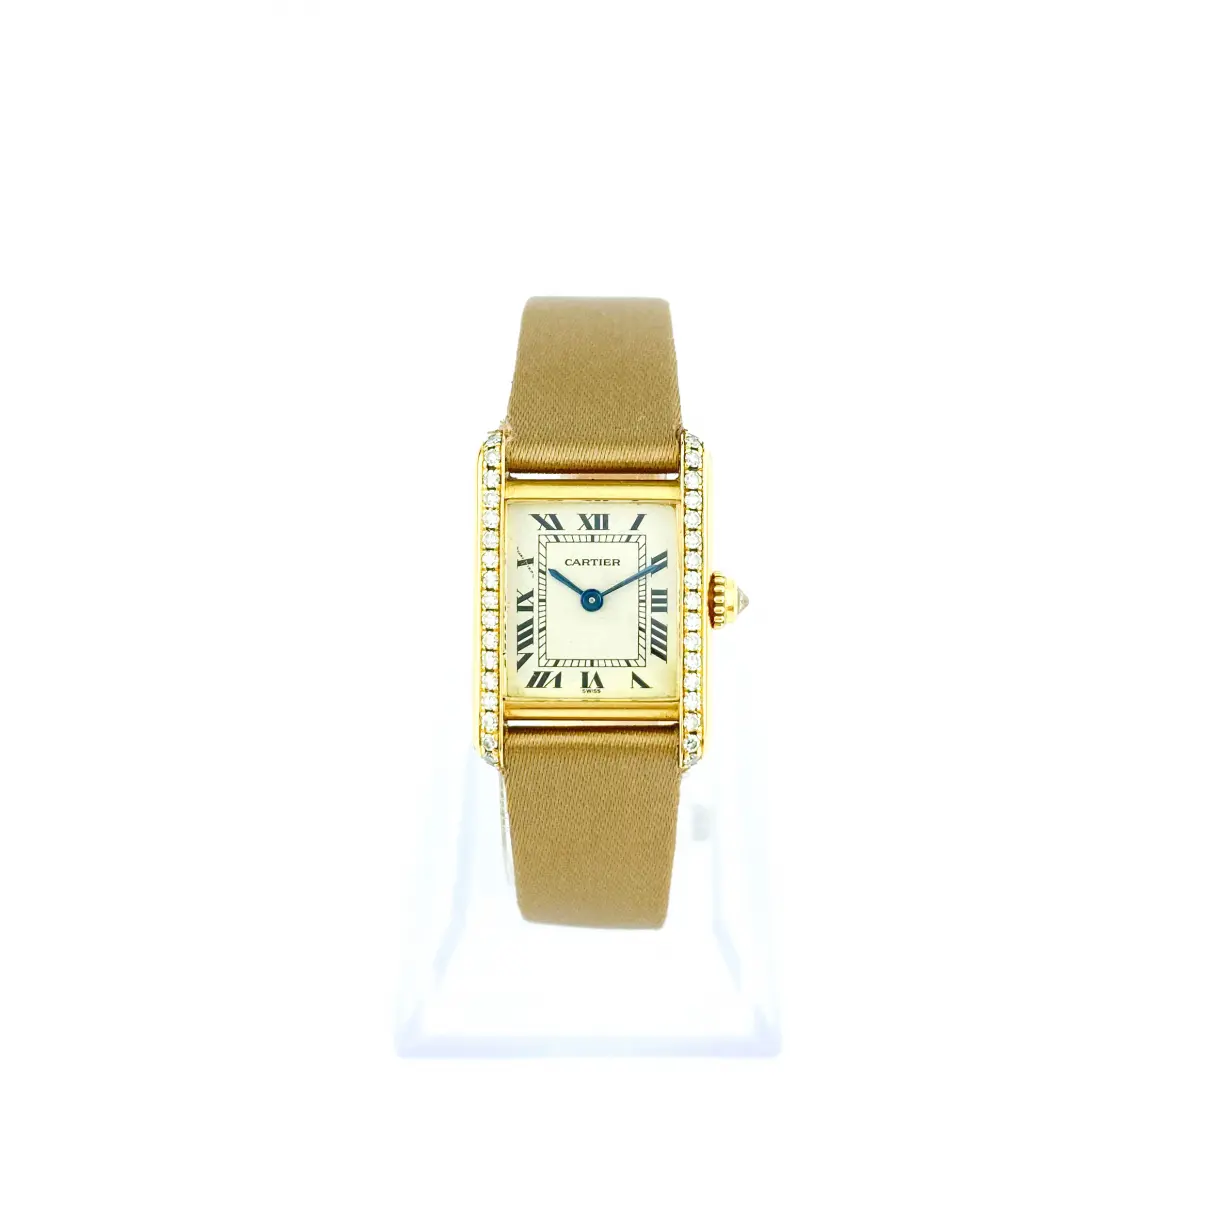 Buy Cartier Tank Louis Cartier yellow gold watch online - Vintage